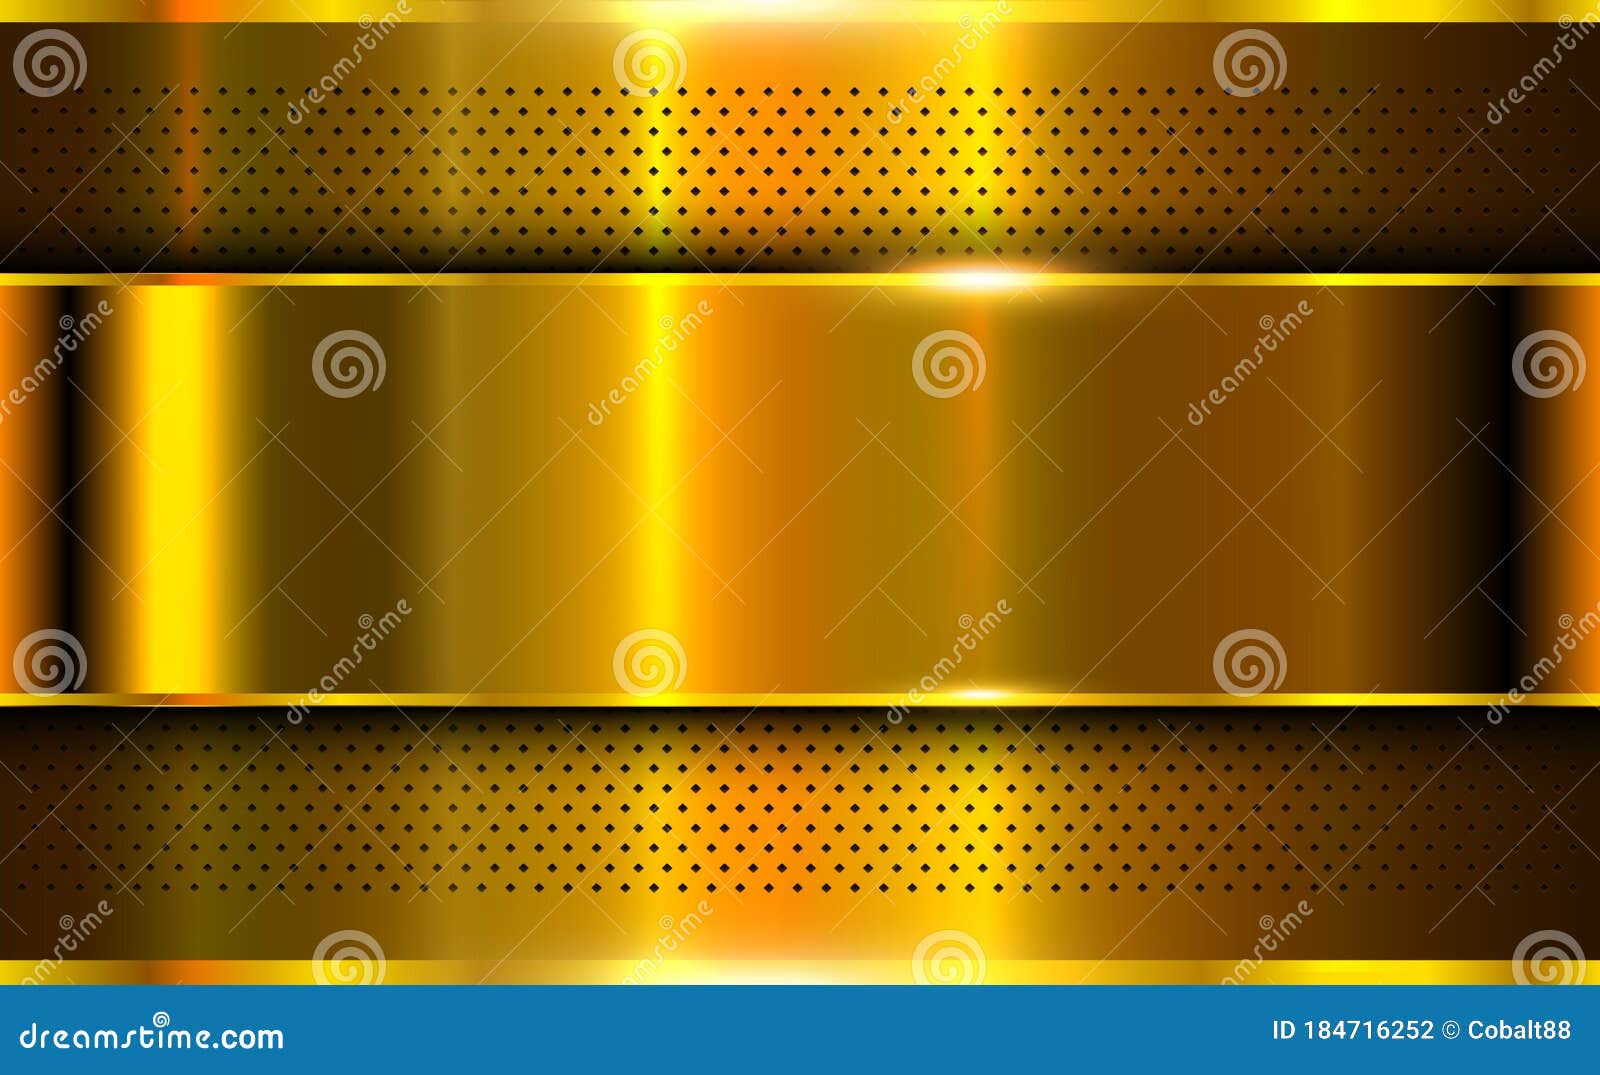 Gold metallic background stock vector. Illustration of metallic - 184716252